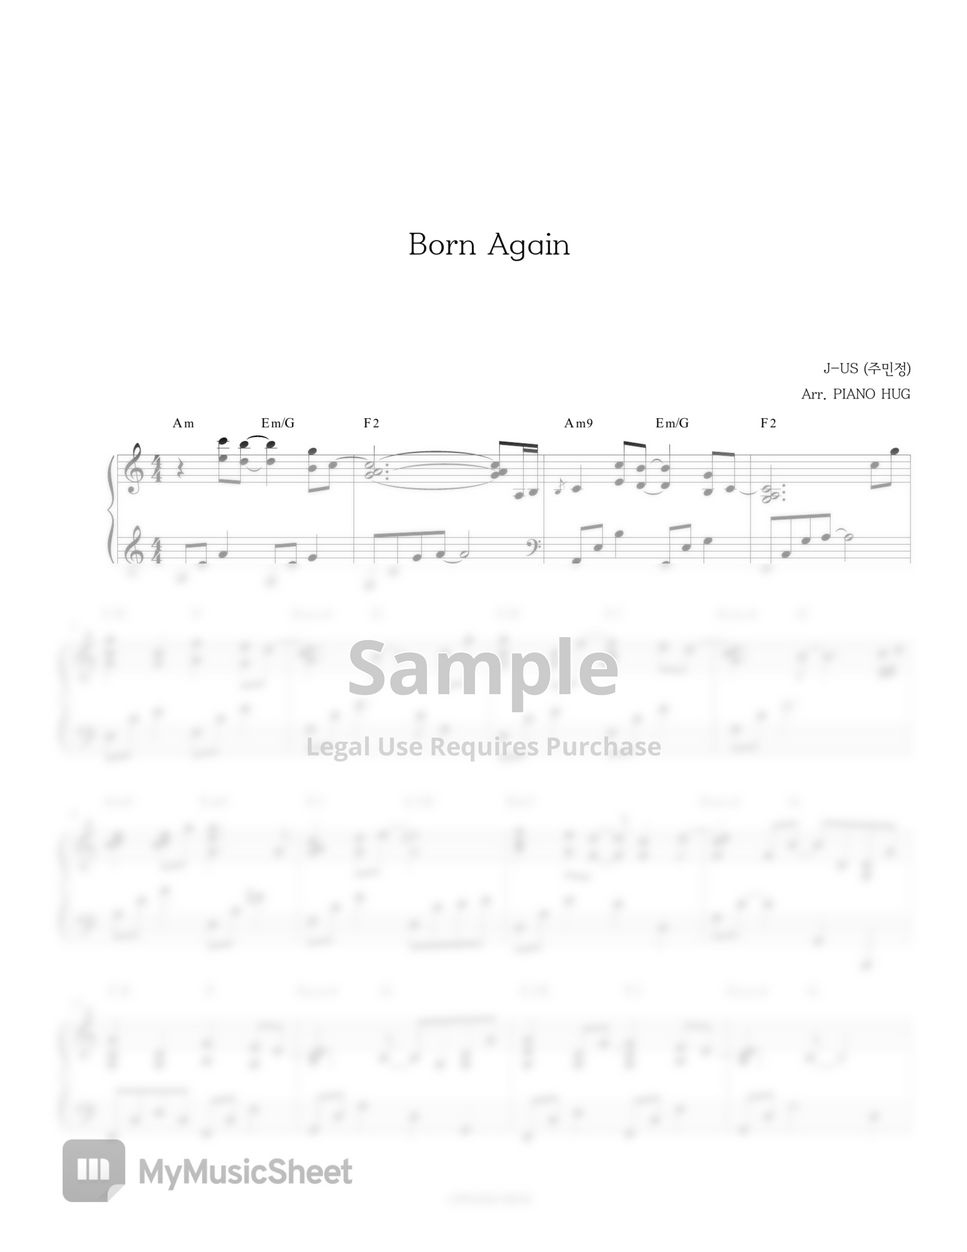 J-US (제이어스) - Born Again by Piano Hug